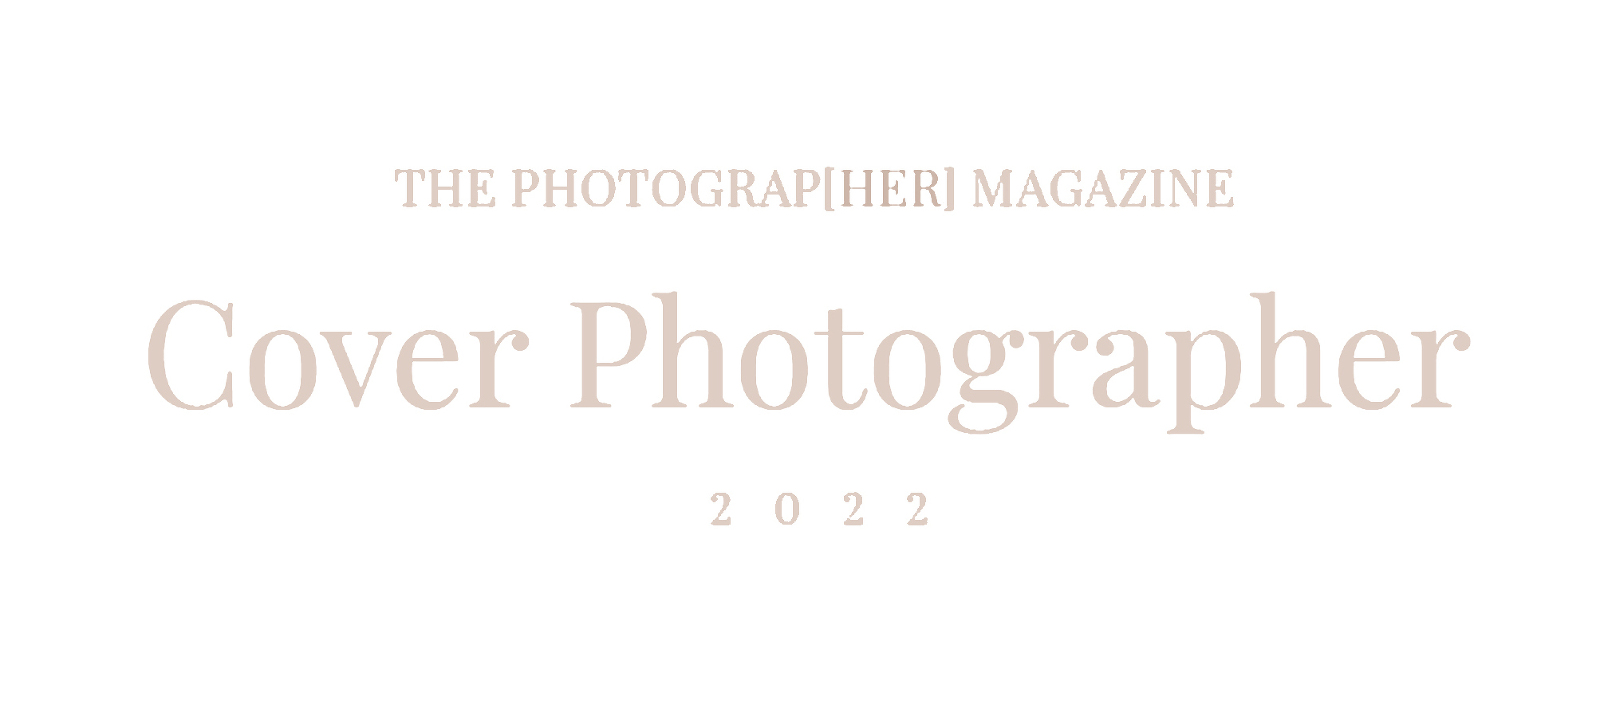 chosen for the cover photograpHER in 2022 newborn magazine